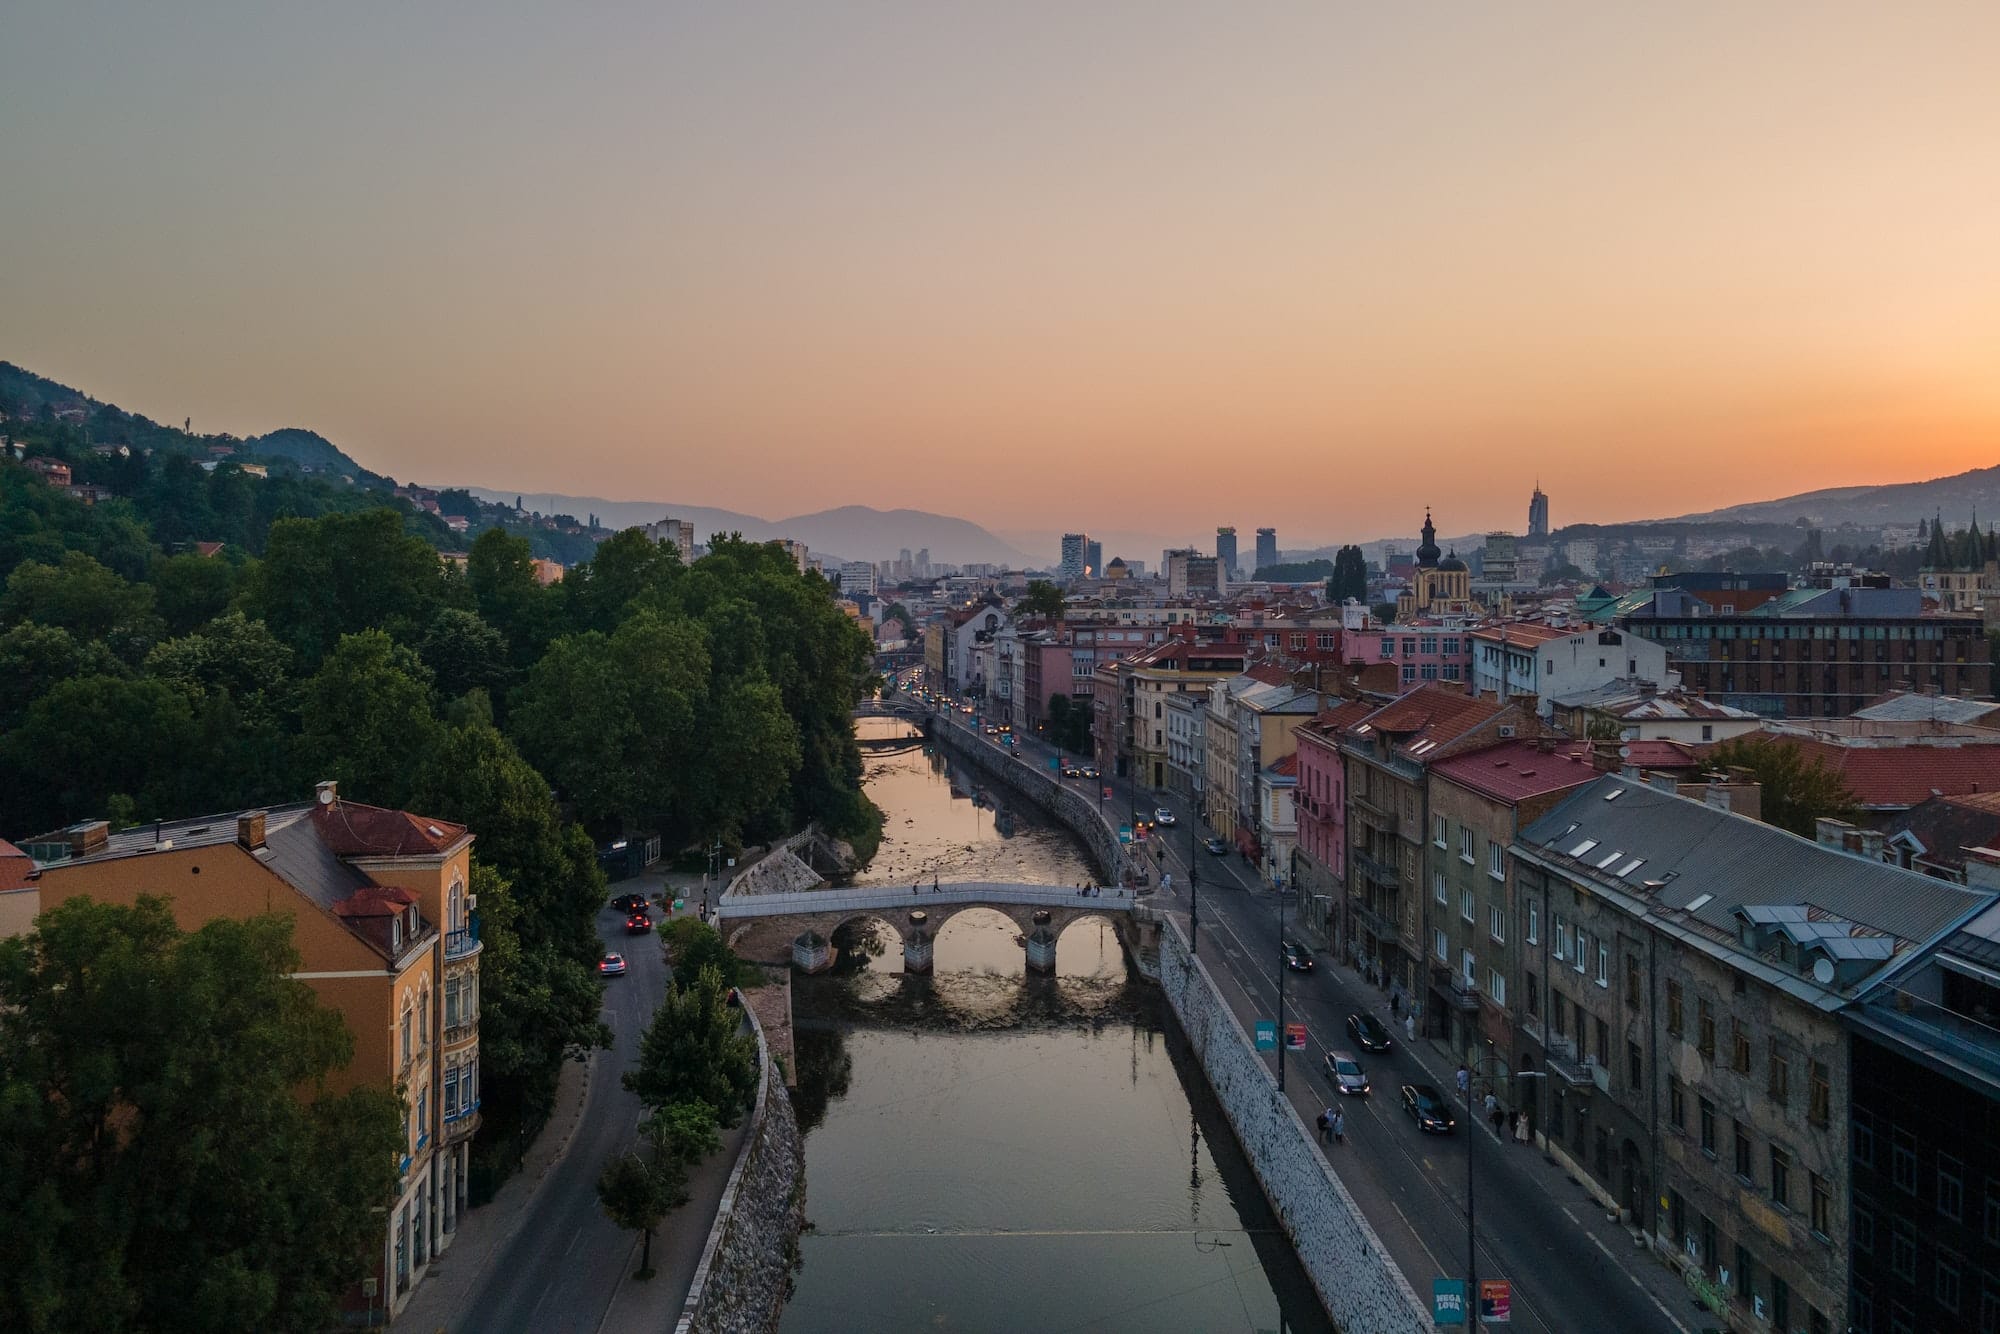 View of the historic center of Sarajevo, Bosnia and Herzegovina